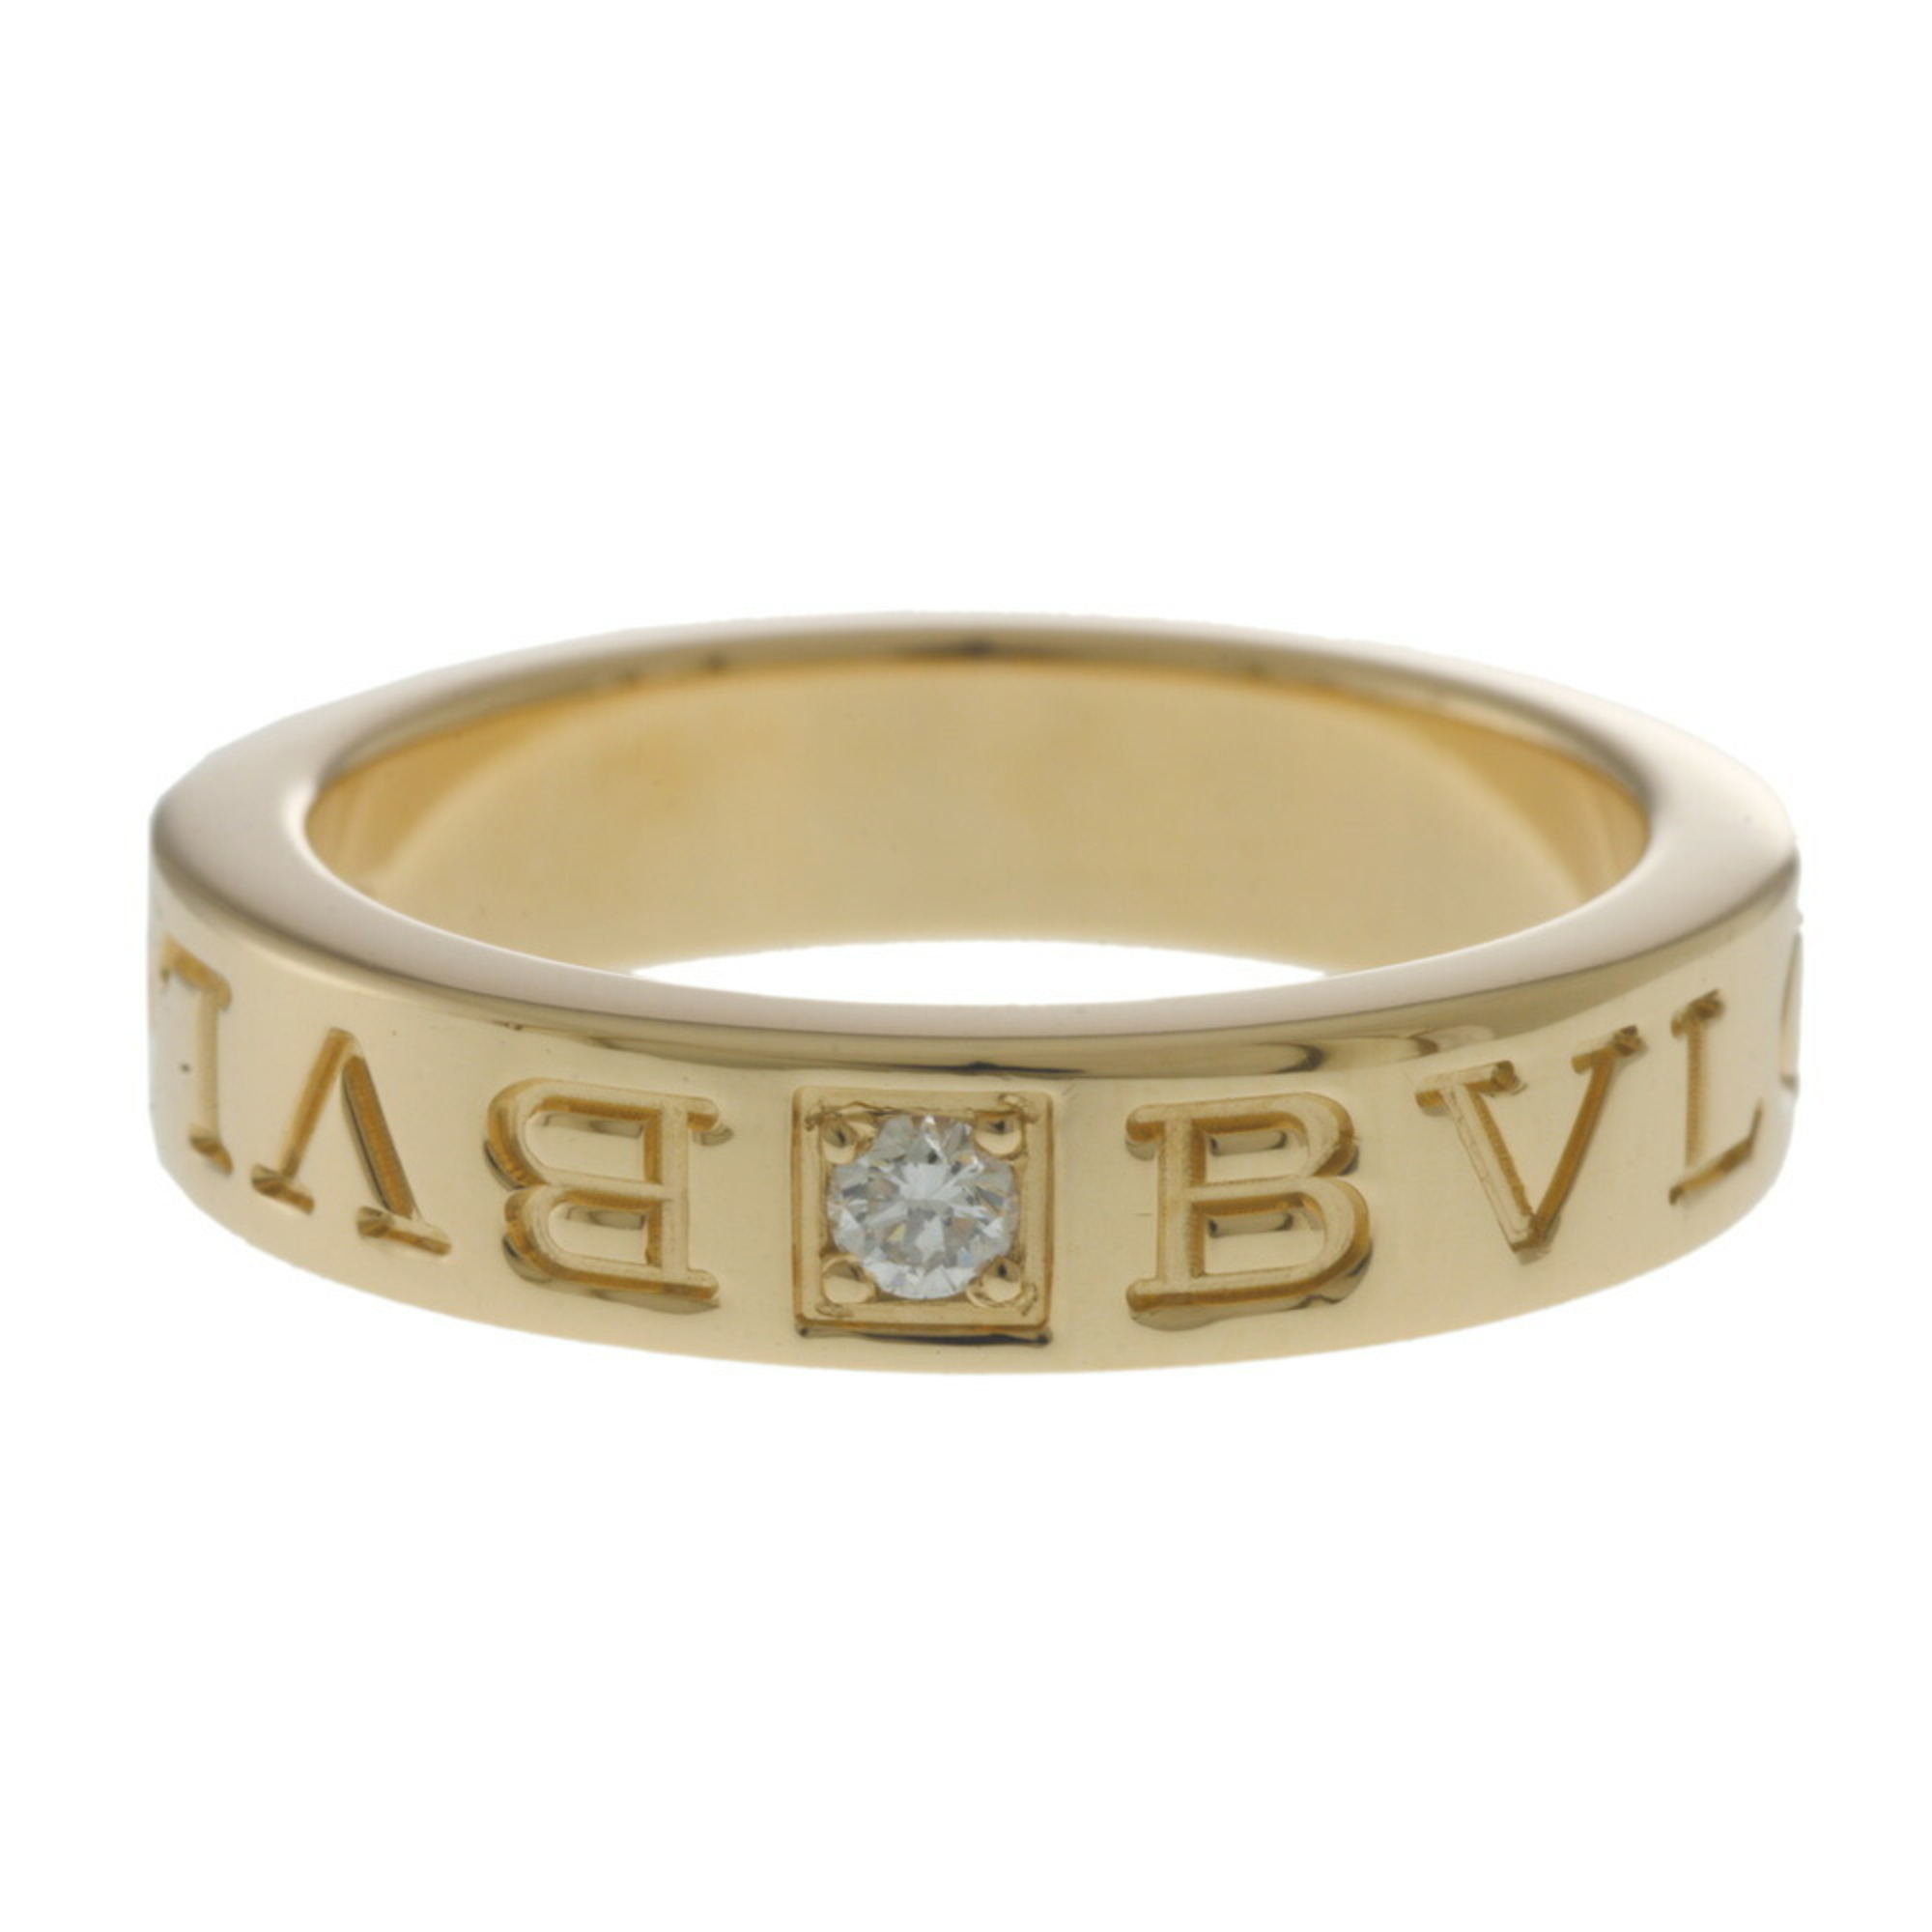 BVLGARI Ring Size 8.5 K18 Yellow Gold Diamond Women's